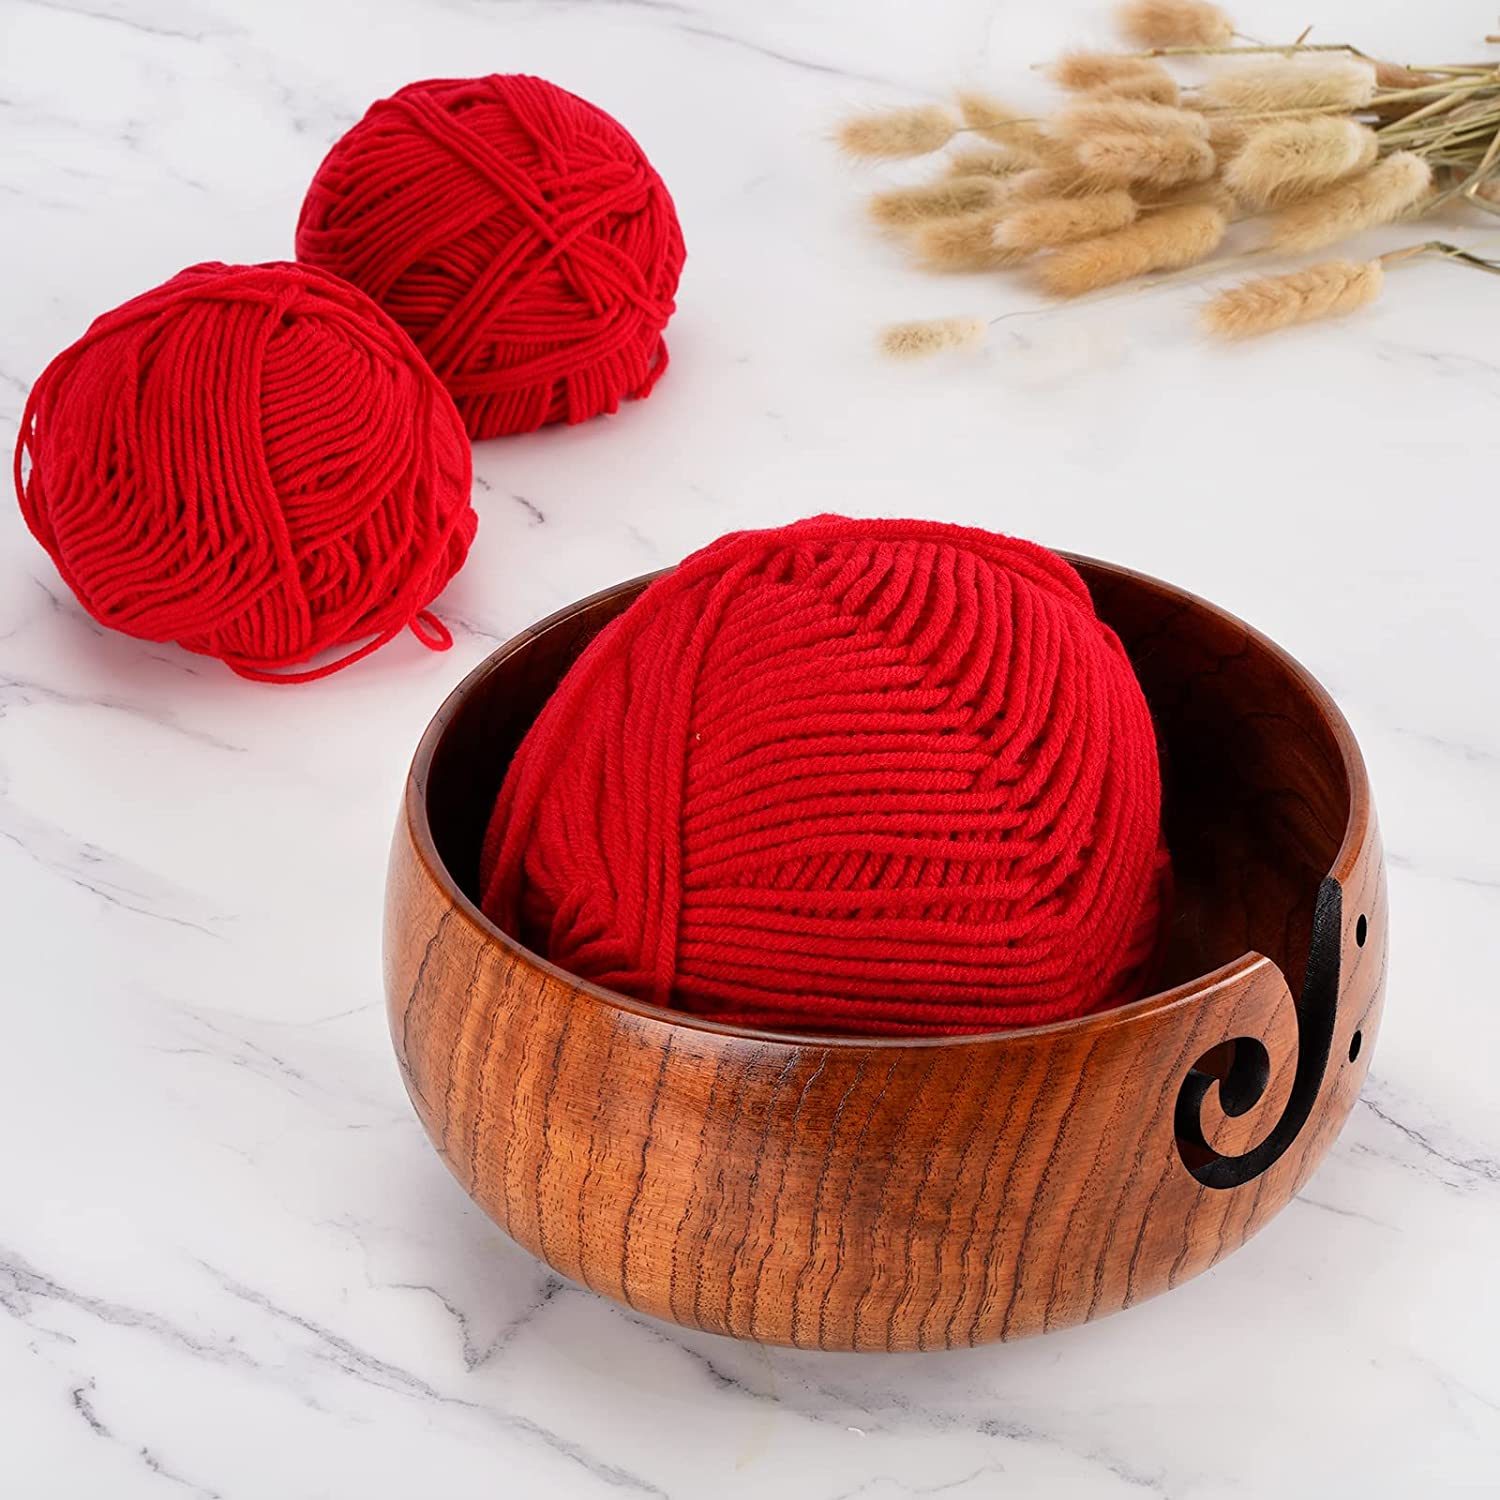 Wooden Yarn Bowl Ecomm Via Amazon.com